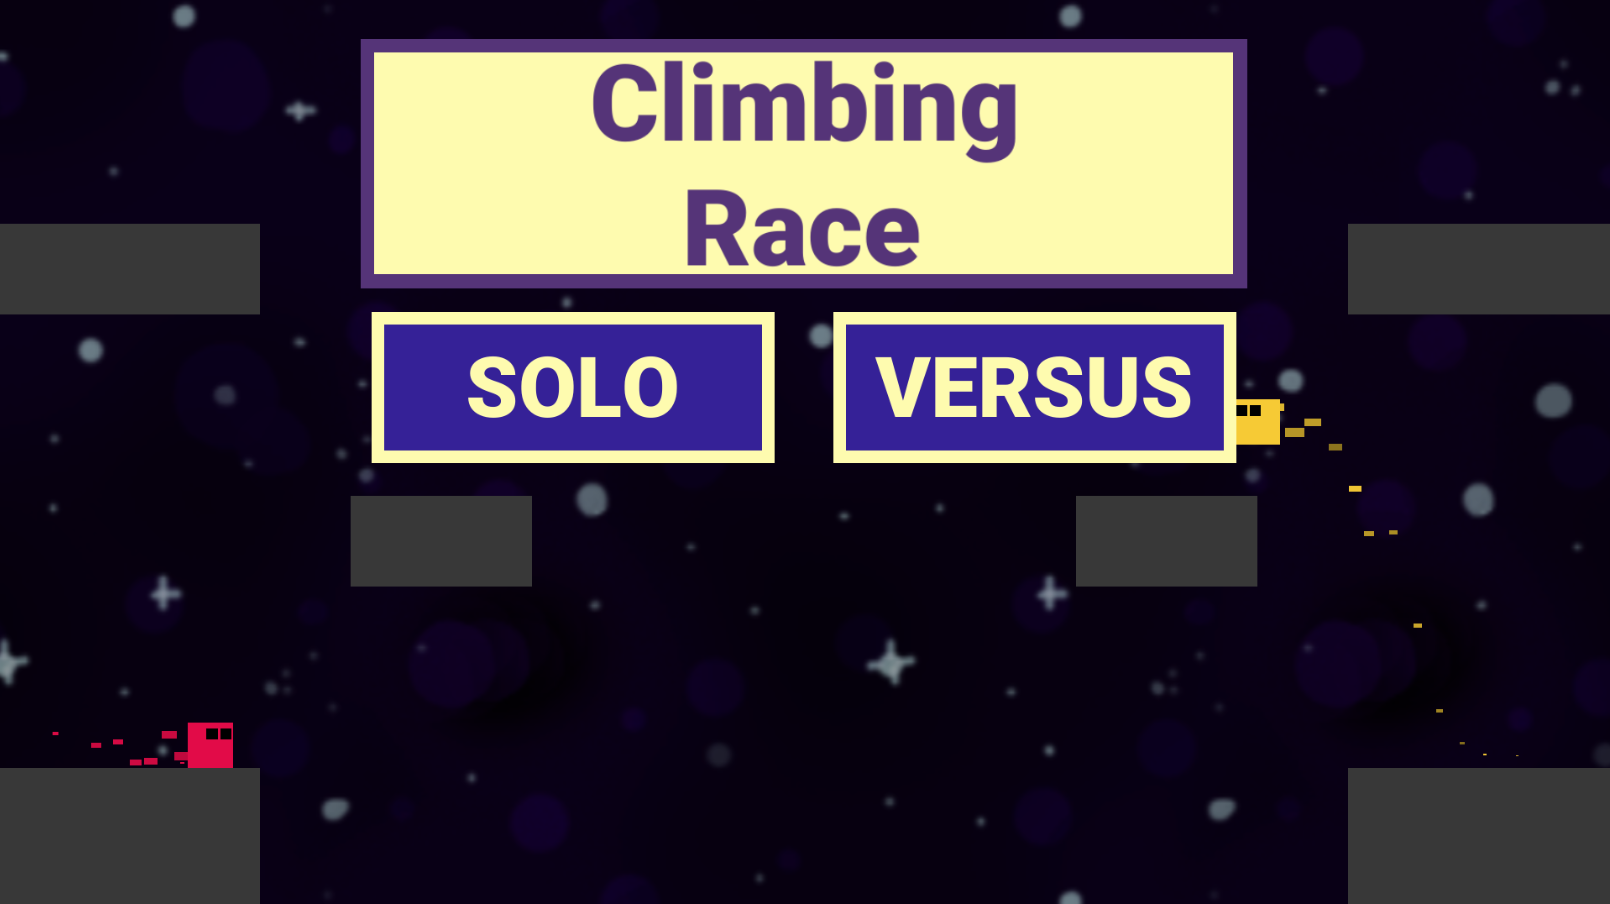 Climbing Race